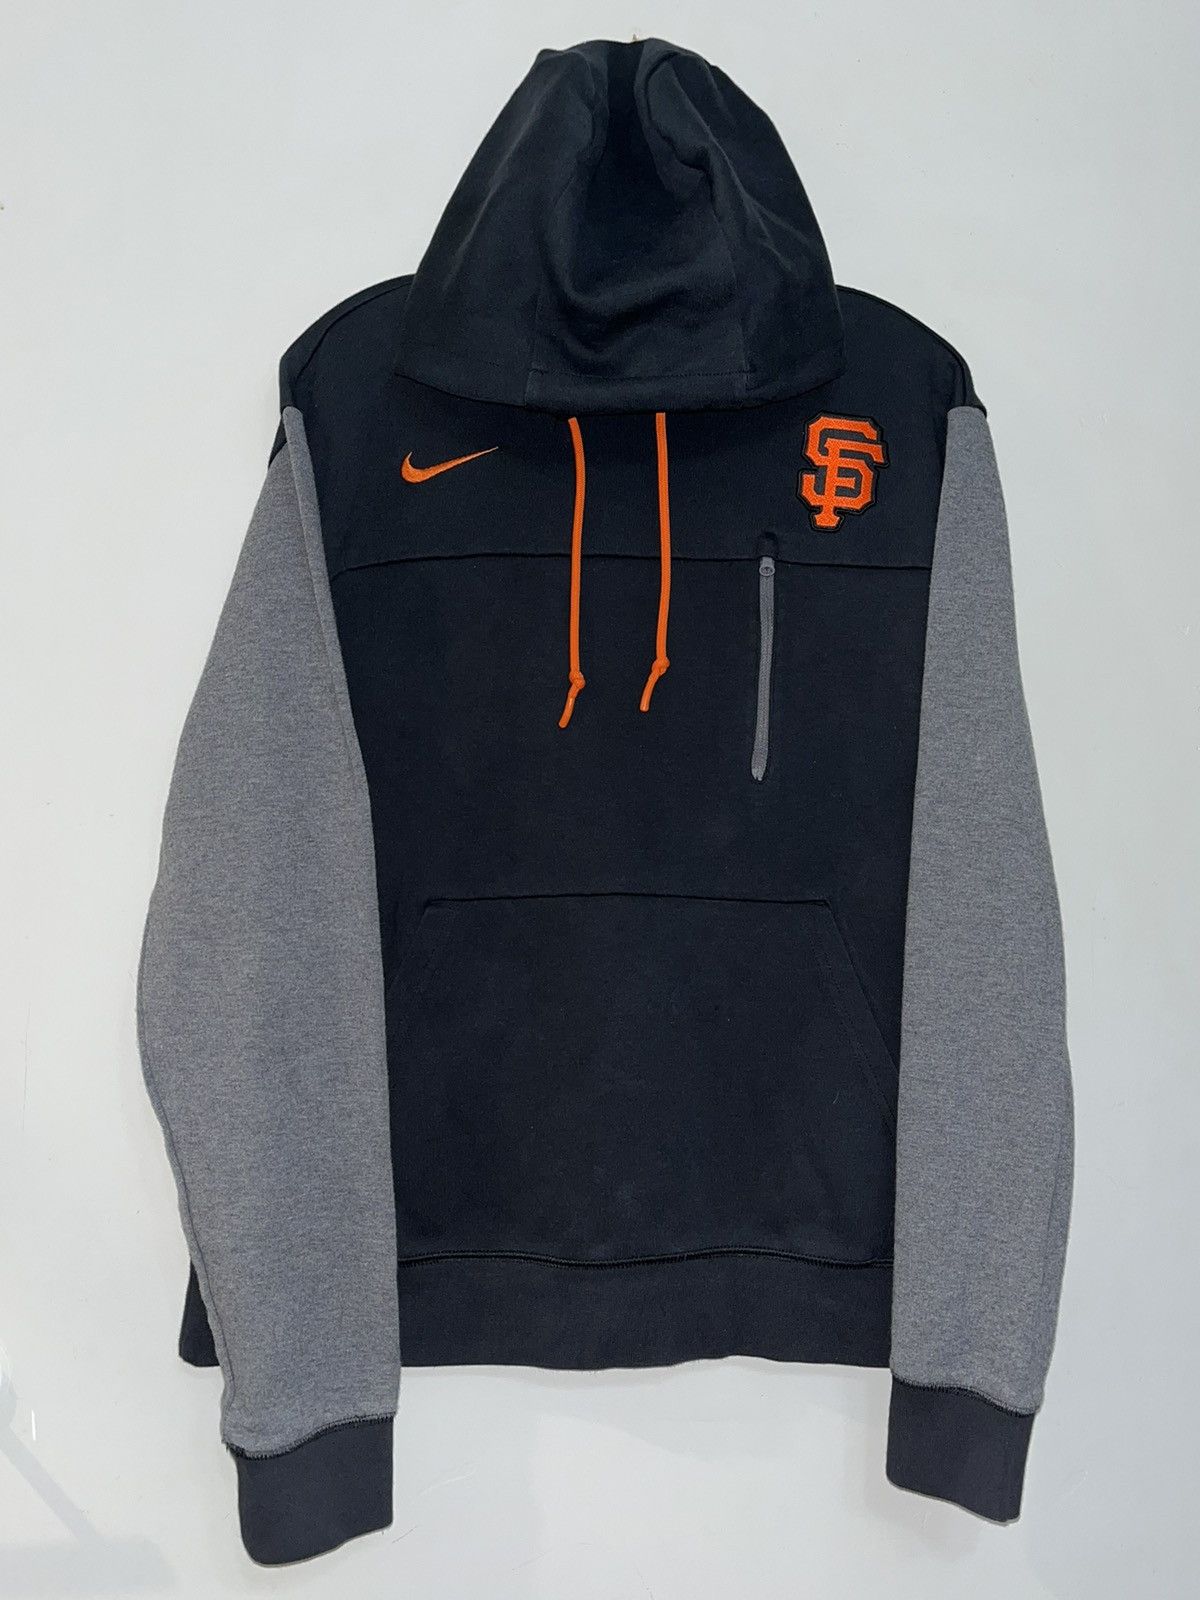 Vintage Y2K Nike Center Swoosh San Francisco Giants MLB SF t-shirt Orange  Black